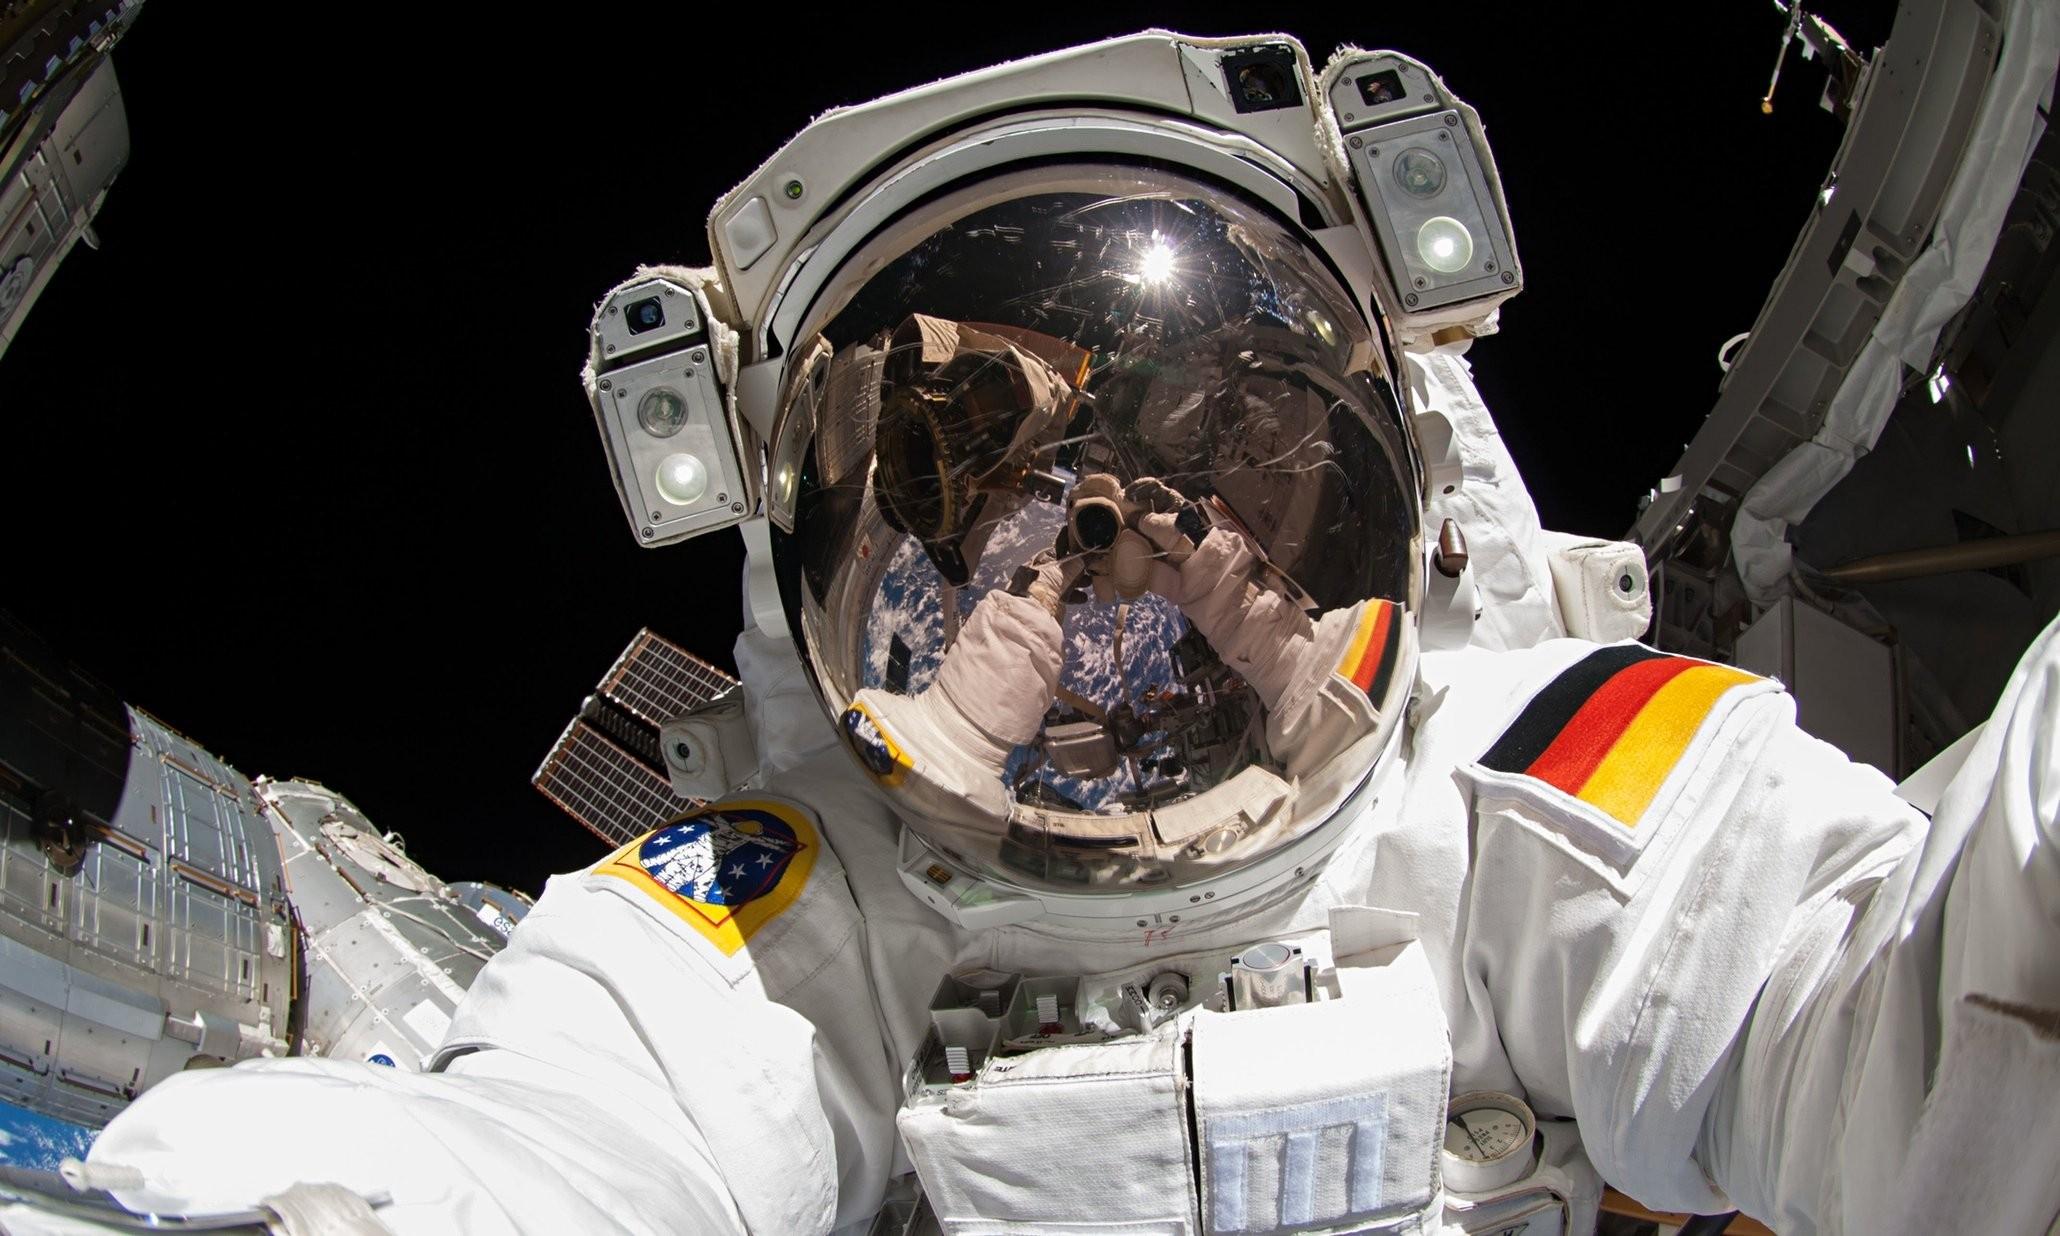 reflection, cameras, self shot, helmet, astronaut, space suit, space station, space wallpaper